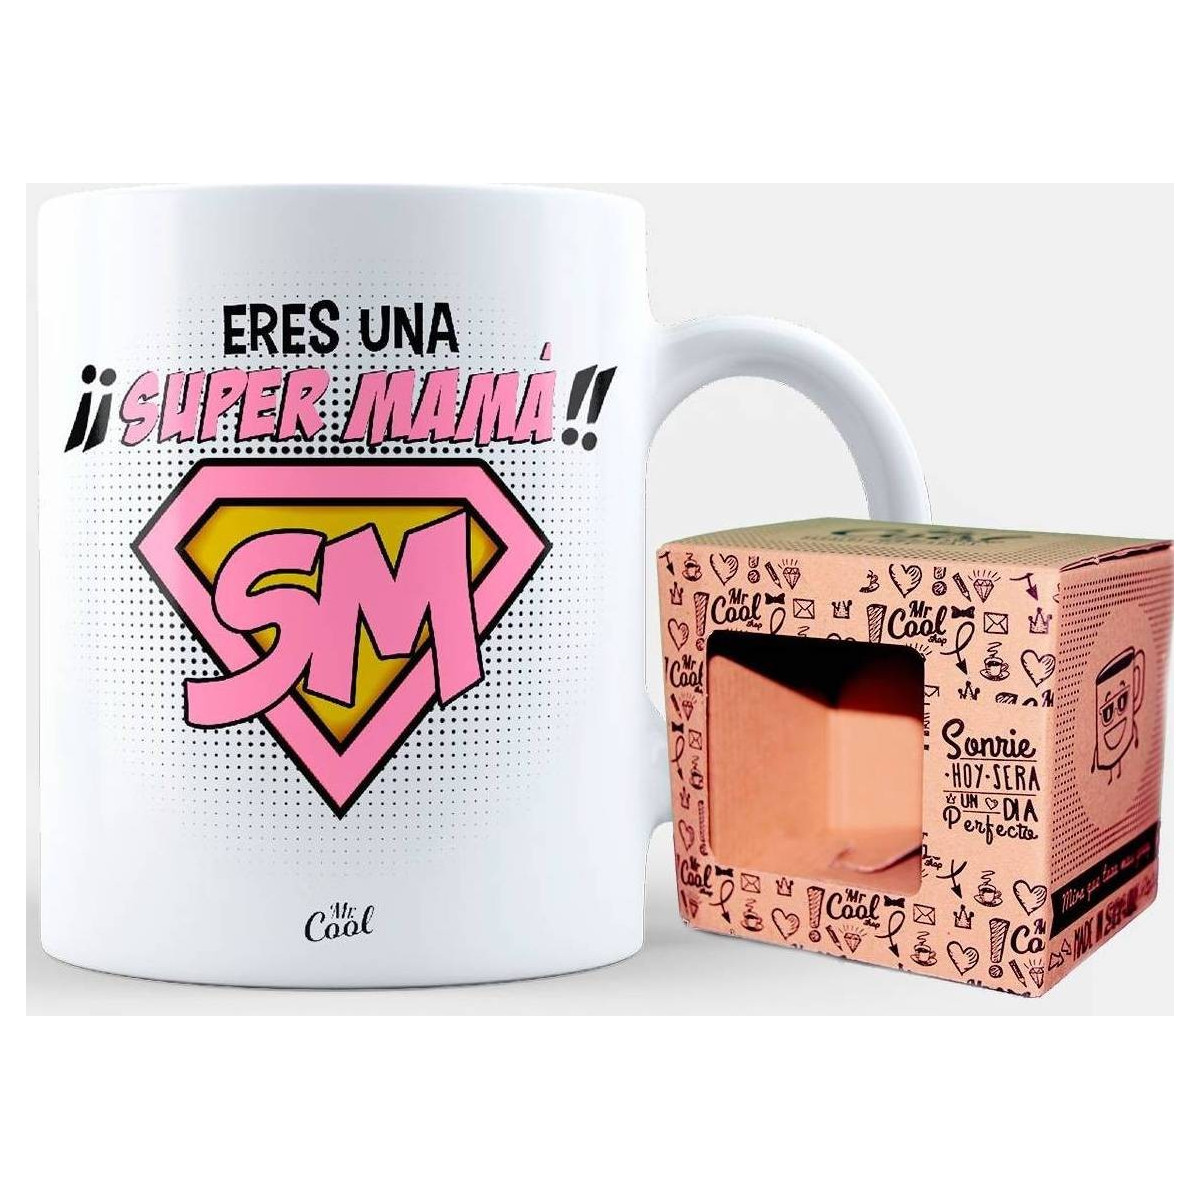 Super mom gift mug